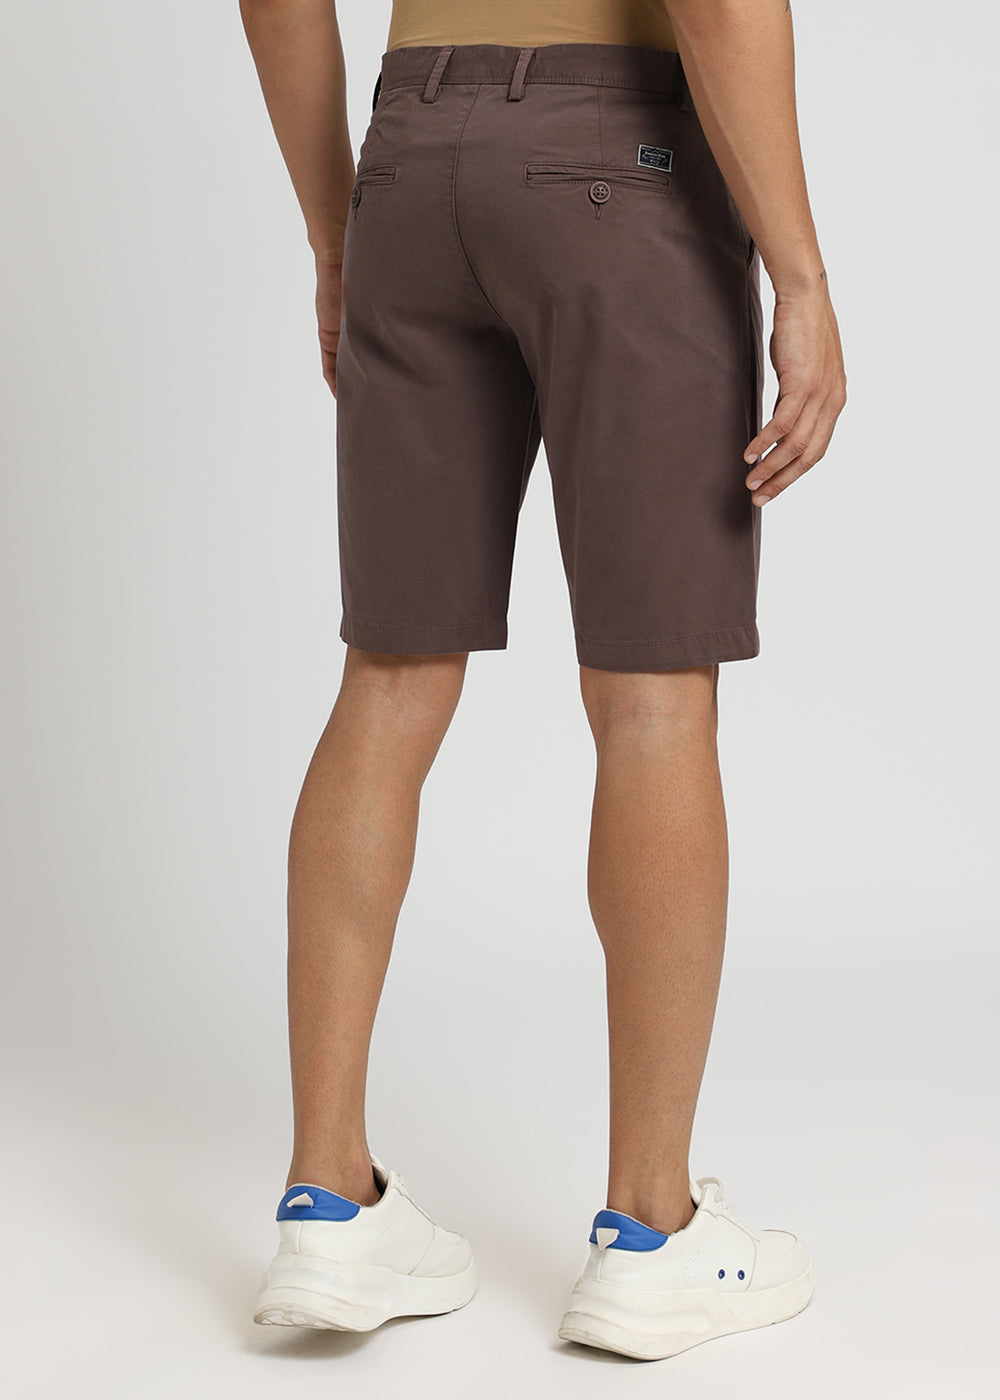 Auburn Brown Shorts